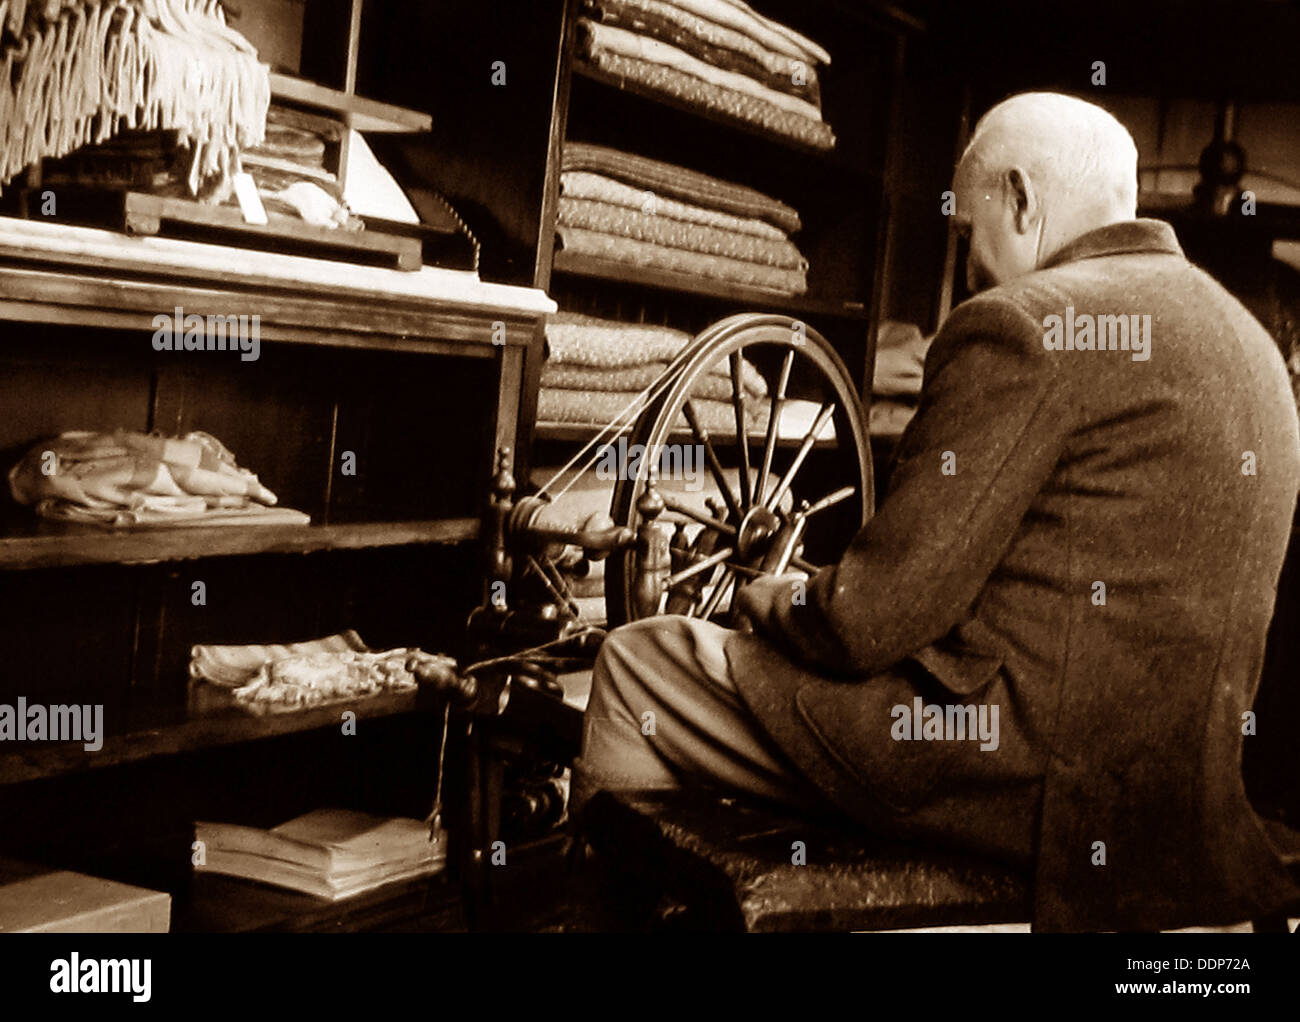 Hand loom weaver / spinner early 1900s Stock Photo